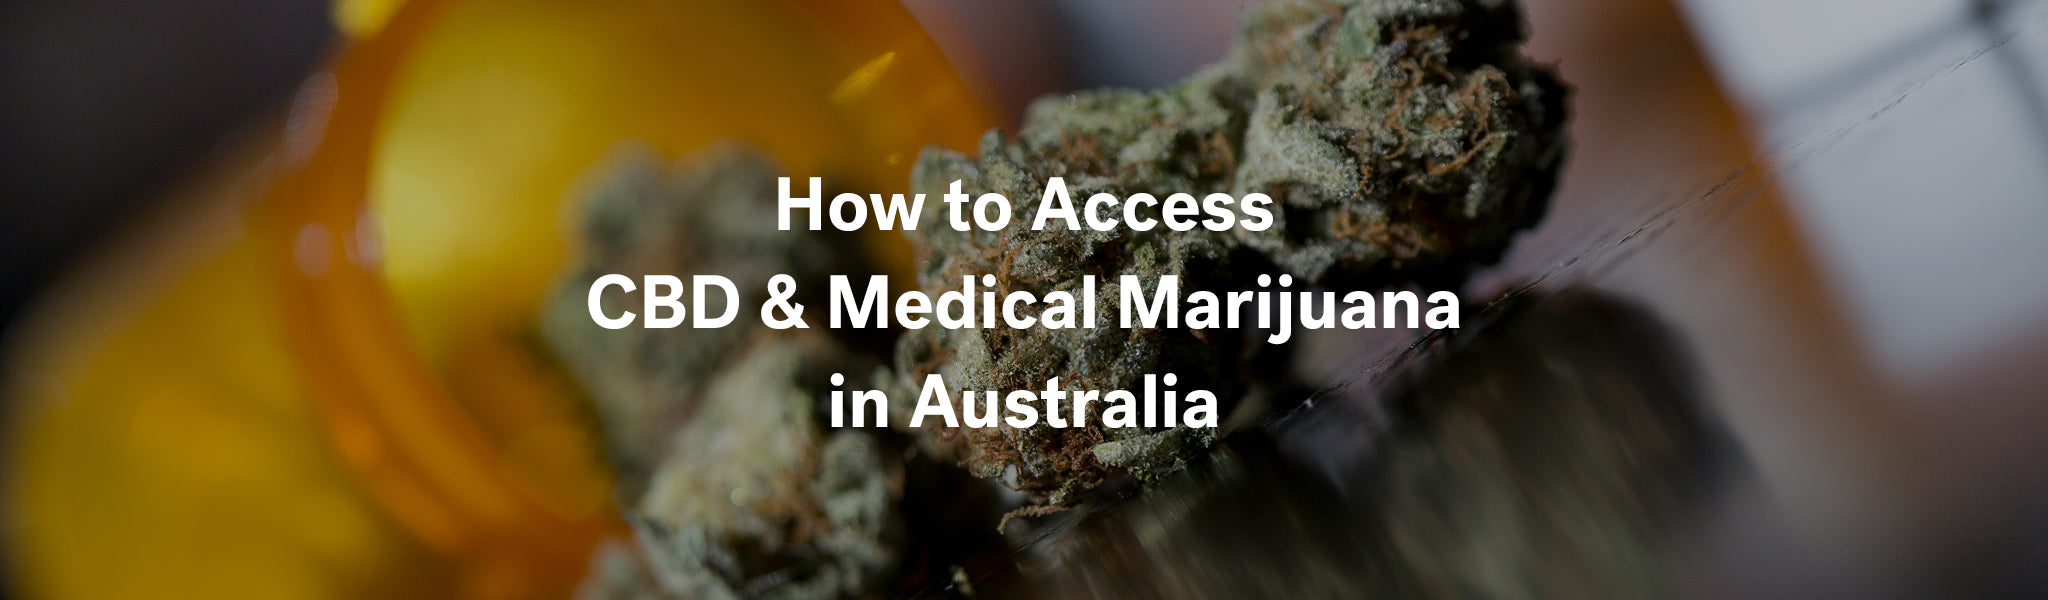 How to Access CBD in Australia